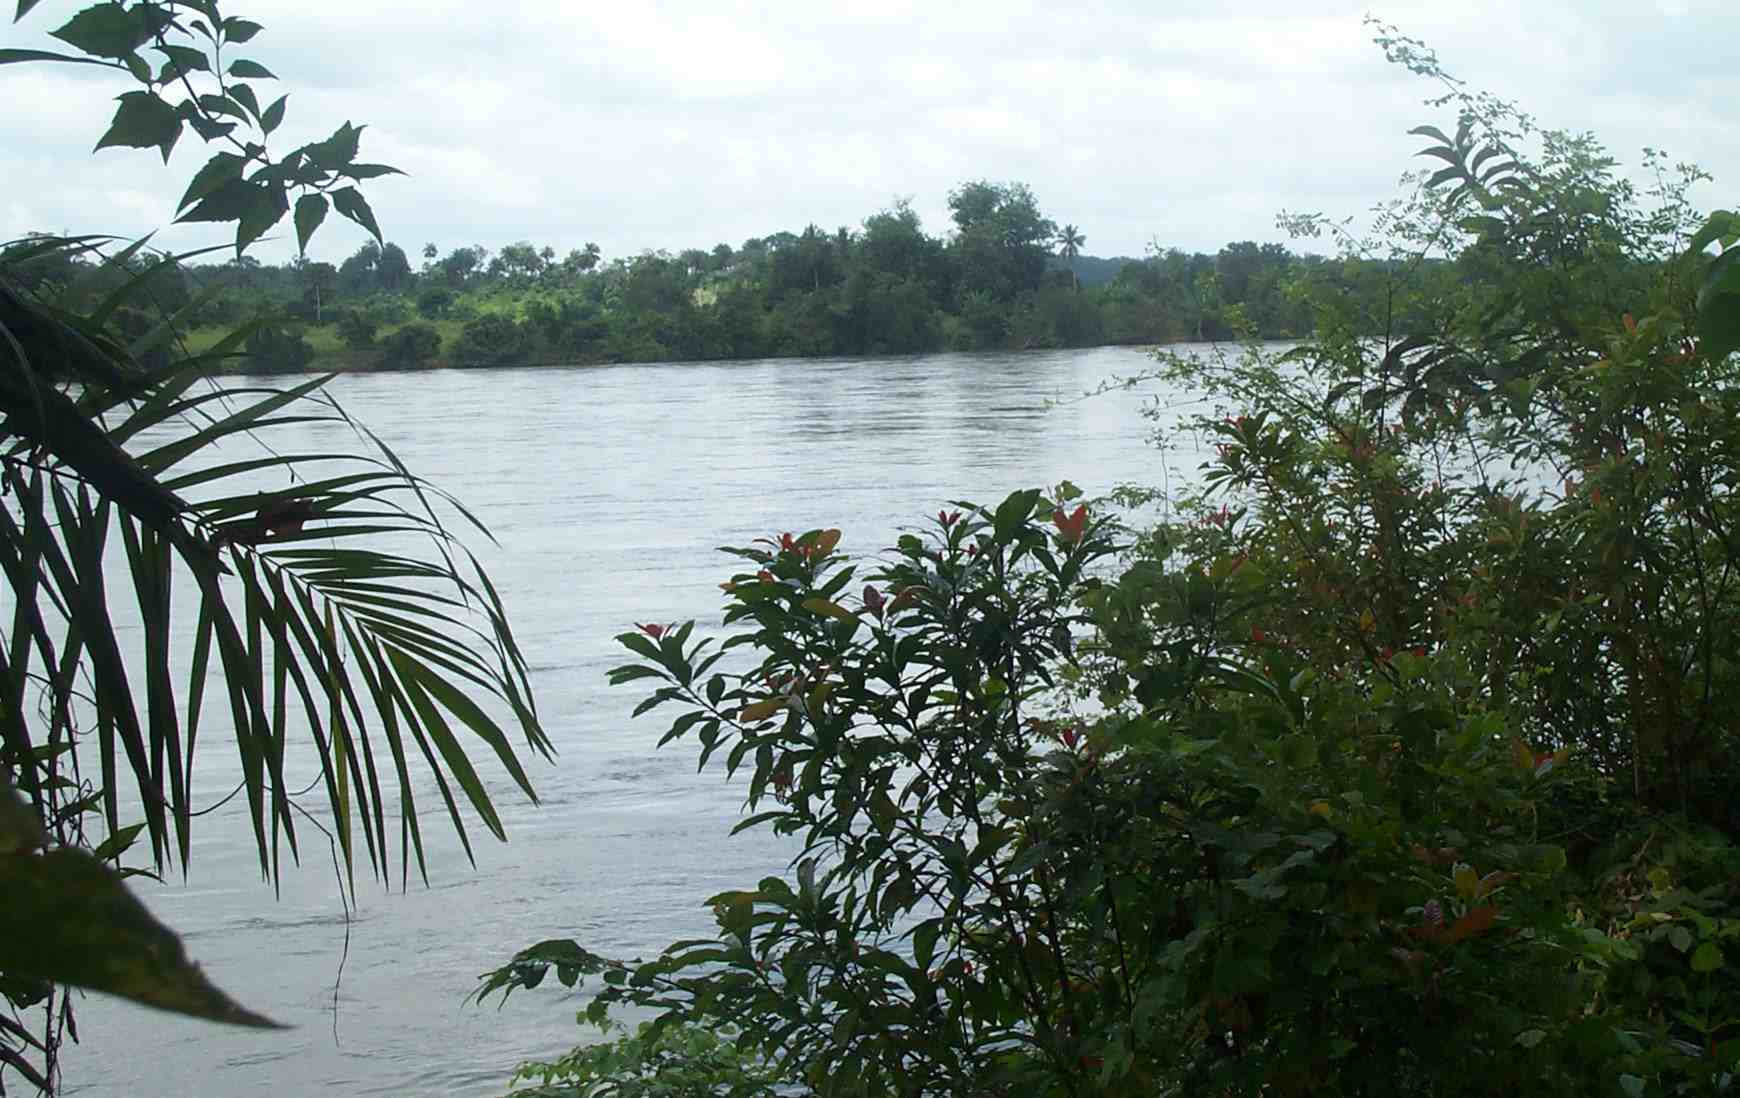 Saint Paul River at White Plains, Liberia, towards the end of the rainy season